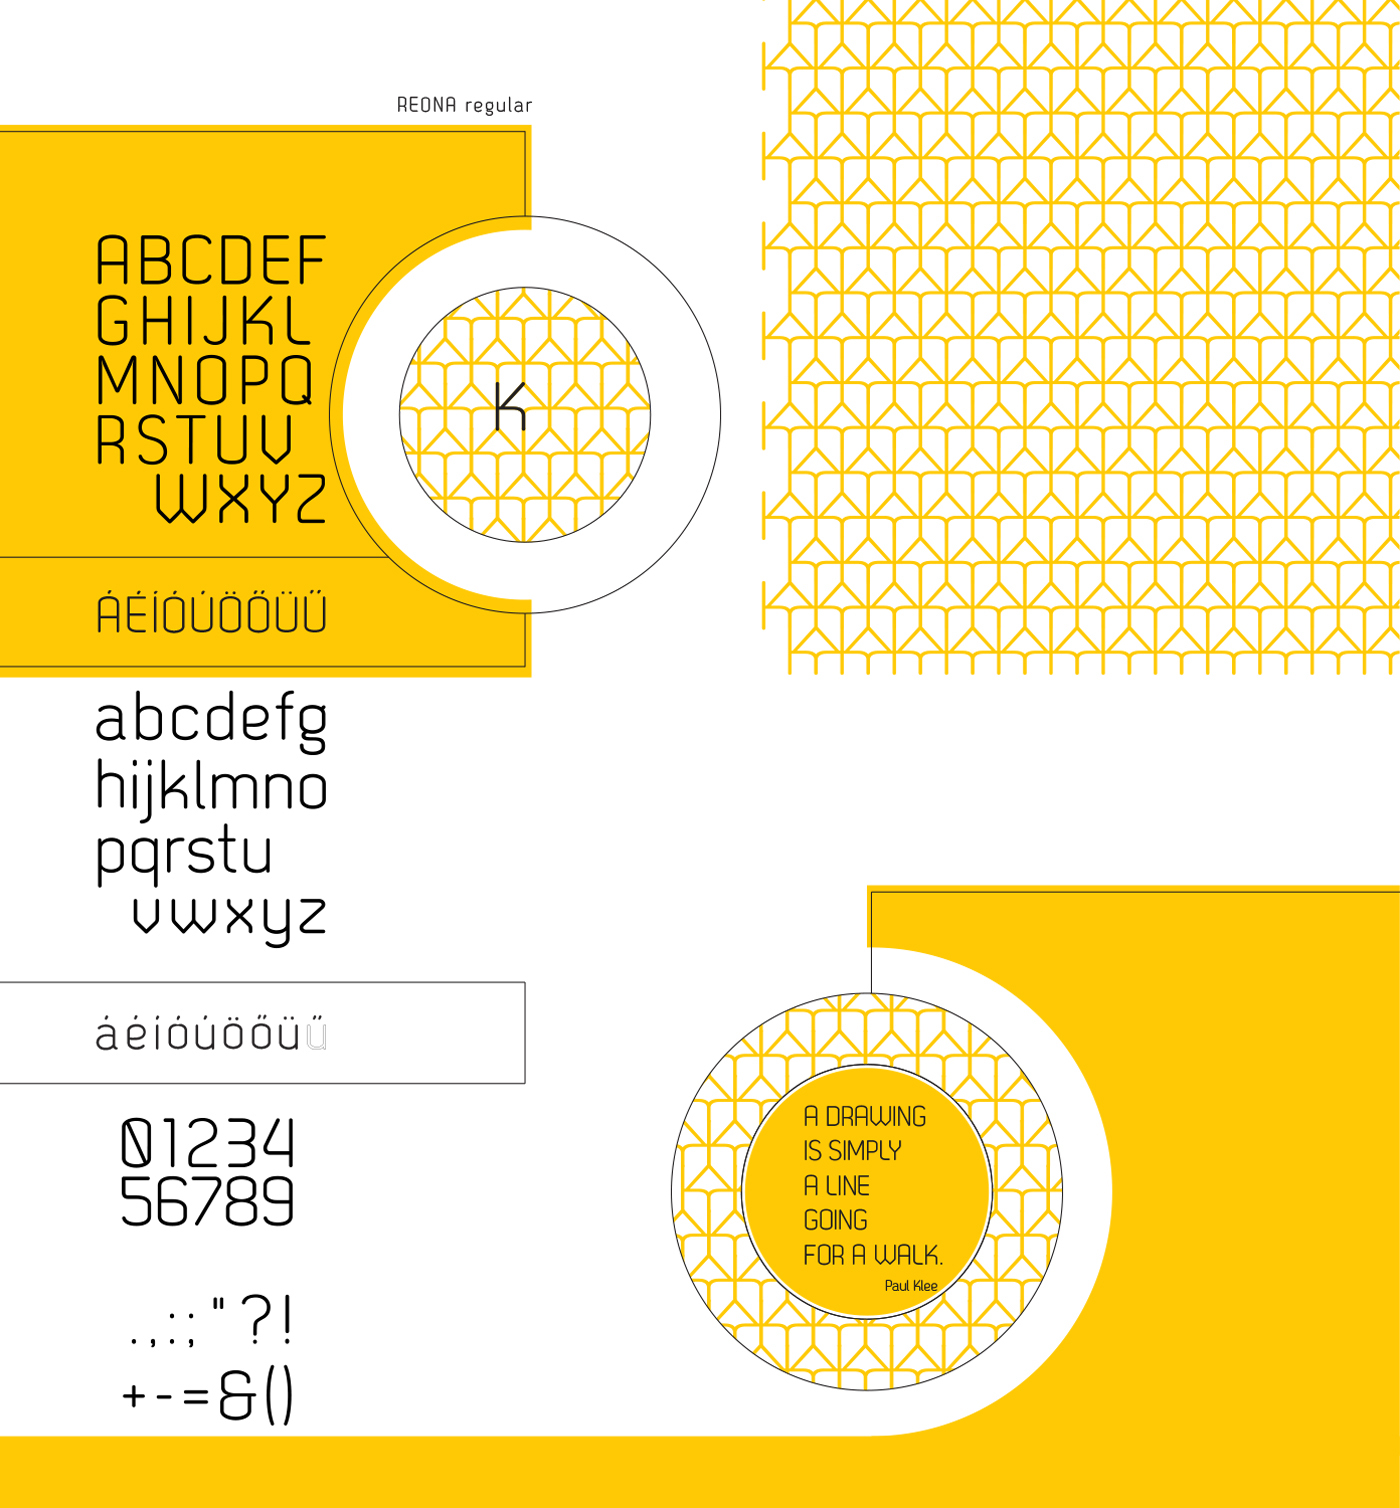 typo freefont font regularfont visualeger graphicdesigneger visualartsinstituteeger Typeface